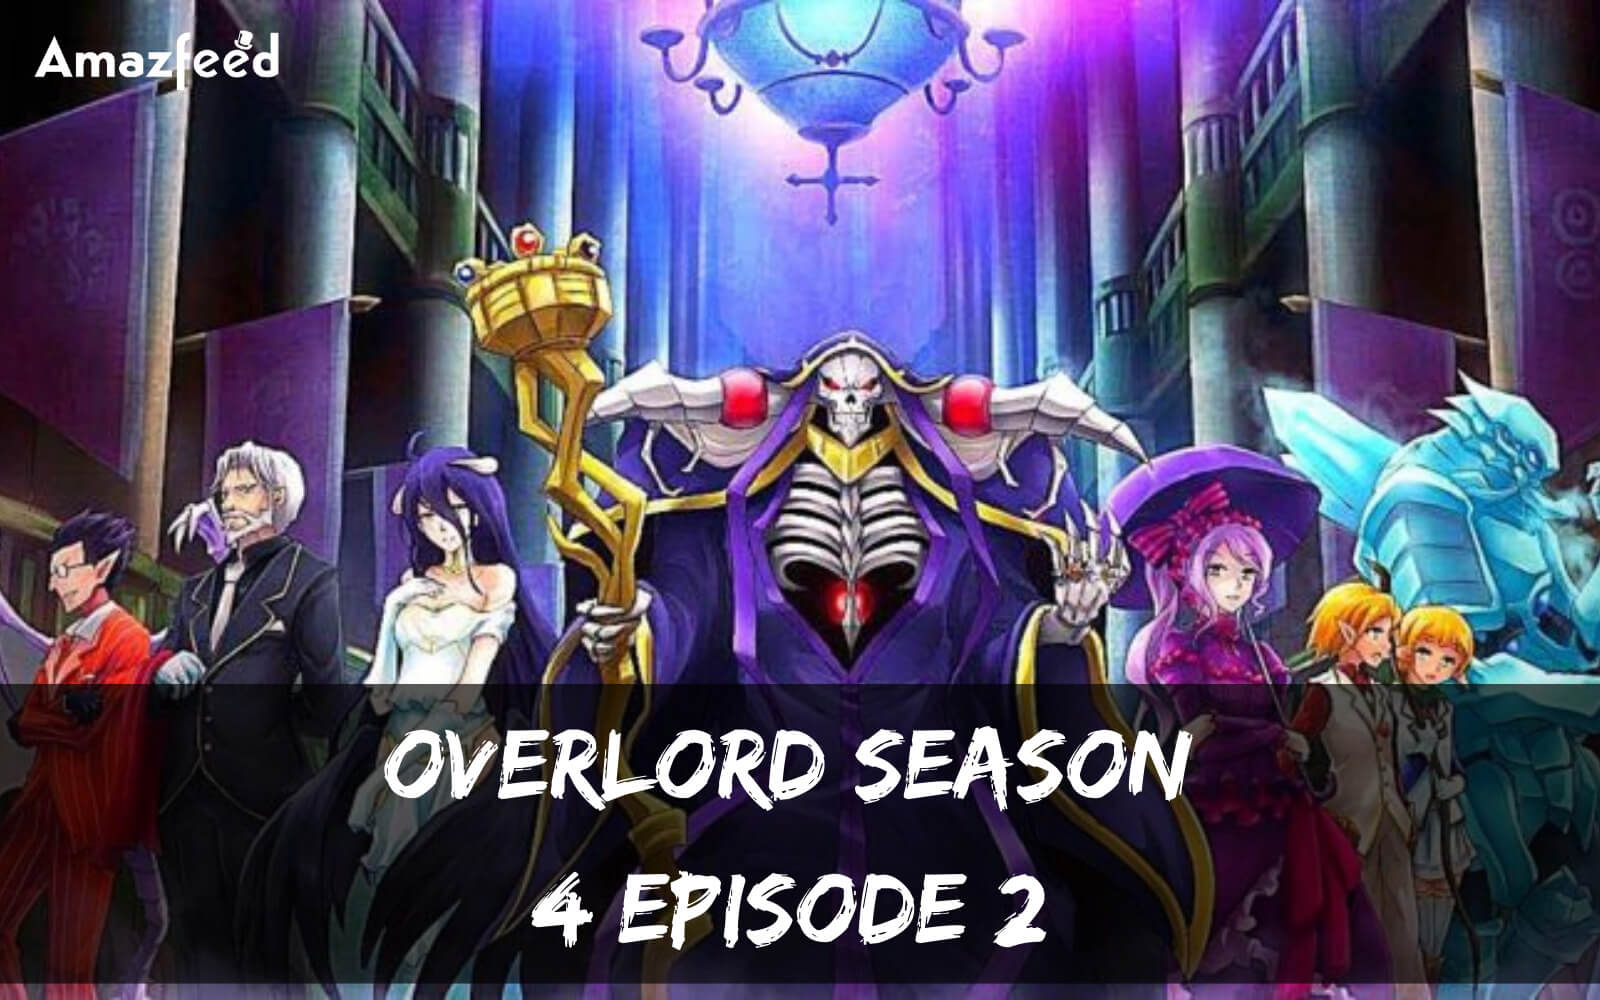 Overlord Season 4 Episode 2 release date